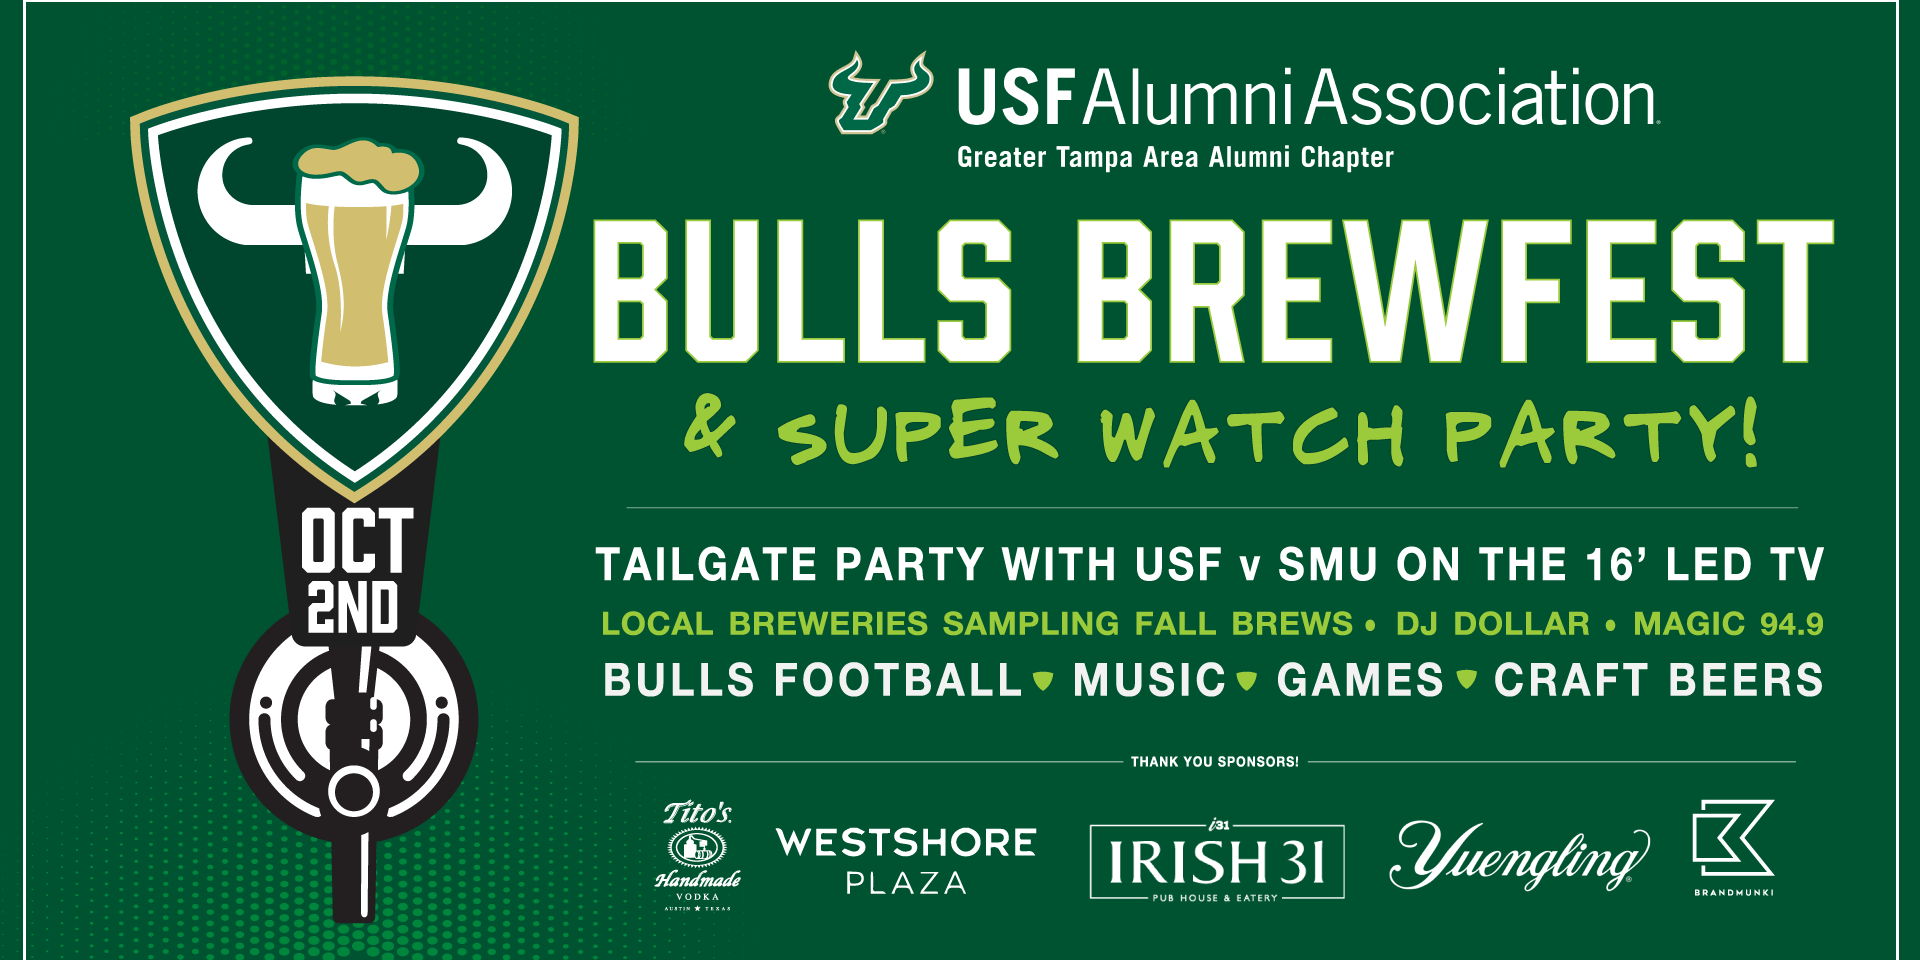 Bulls Brewfest promotional image